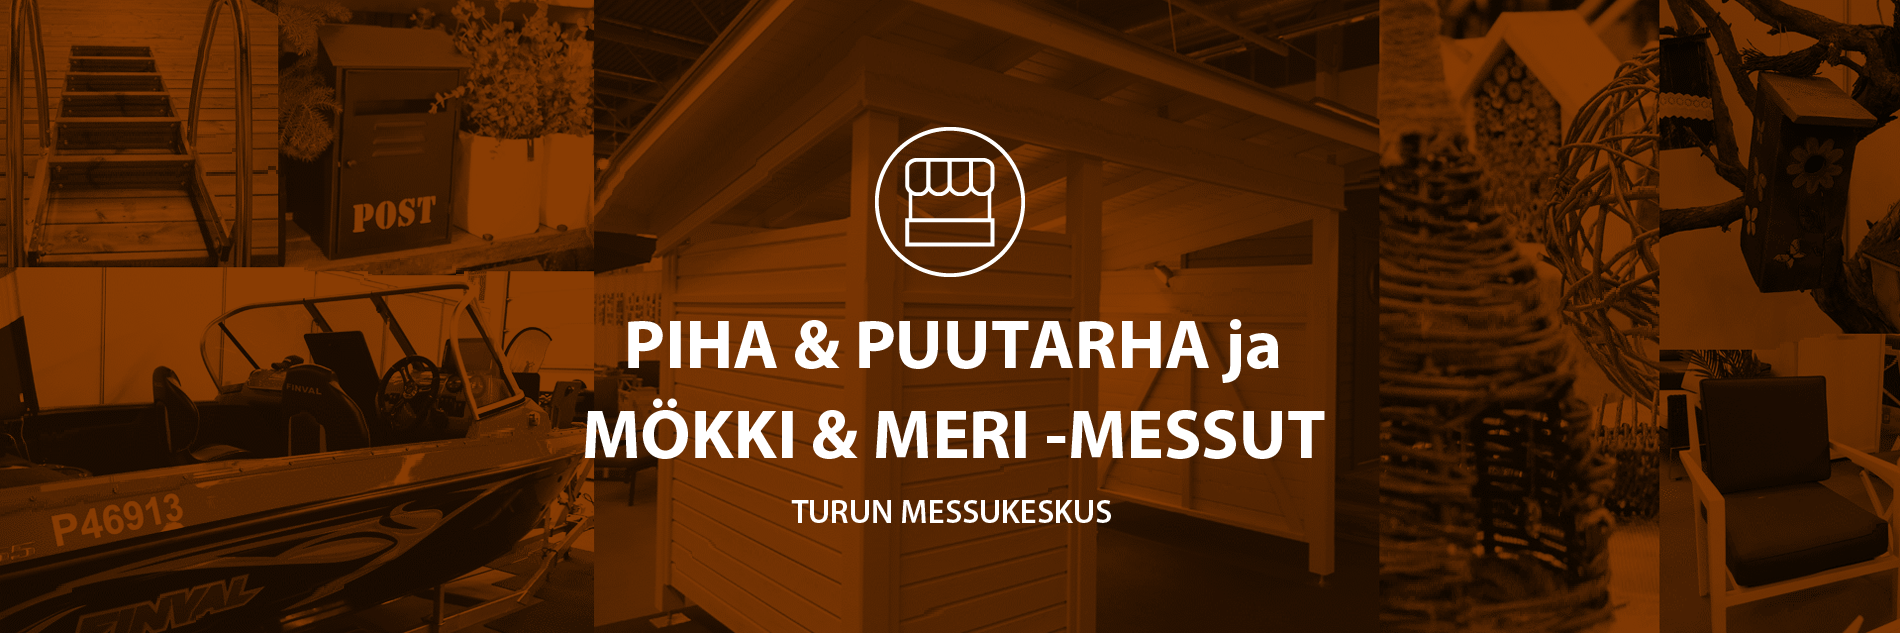 Piha & Puutarha ja Mökki & Meri -messut - Messu- ja ostosretket